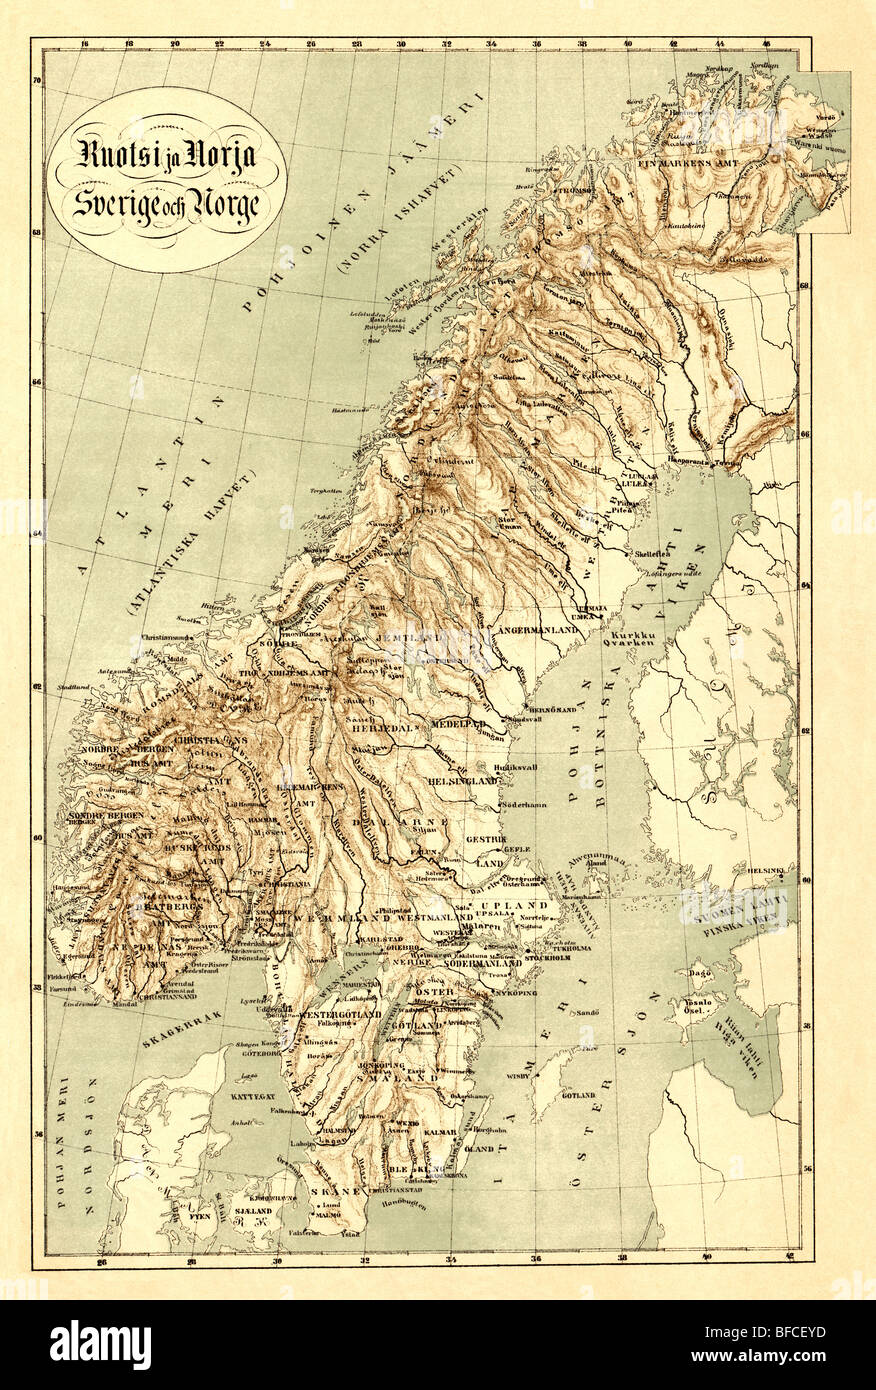 Old map of Scandinavia (19 centuries) Stock Photo